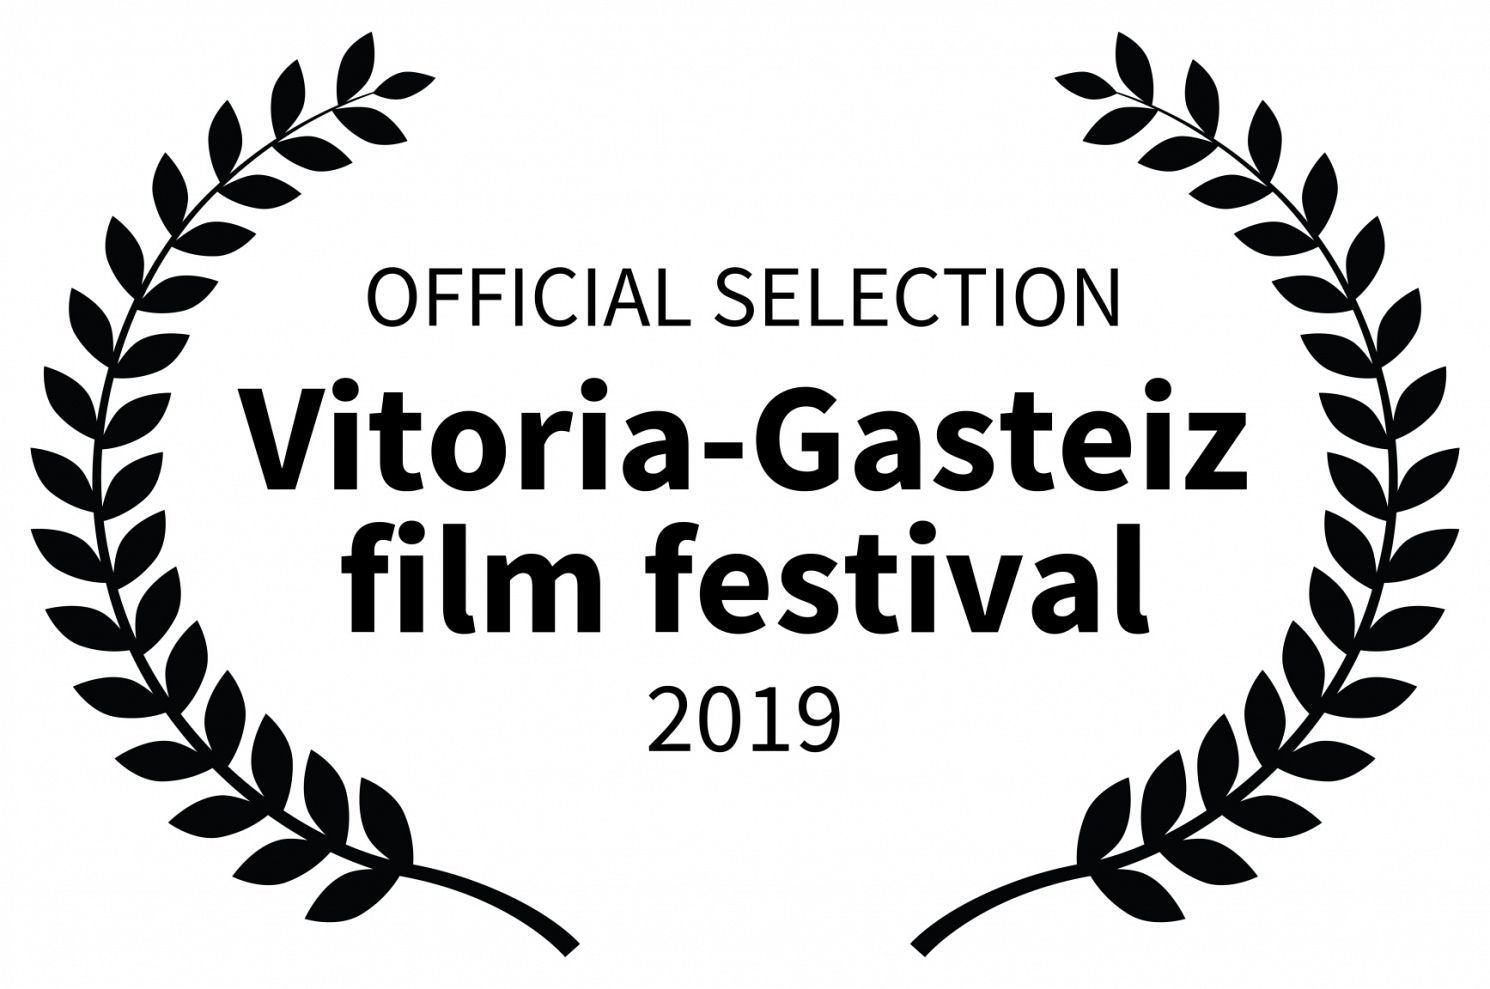 Vitoria-Gasteiz Film Festival